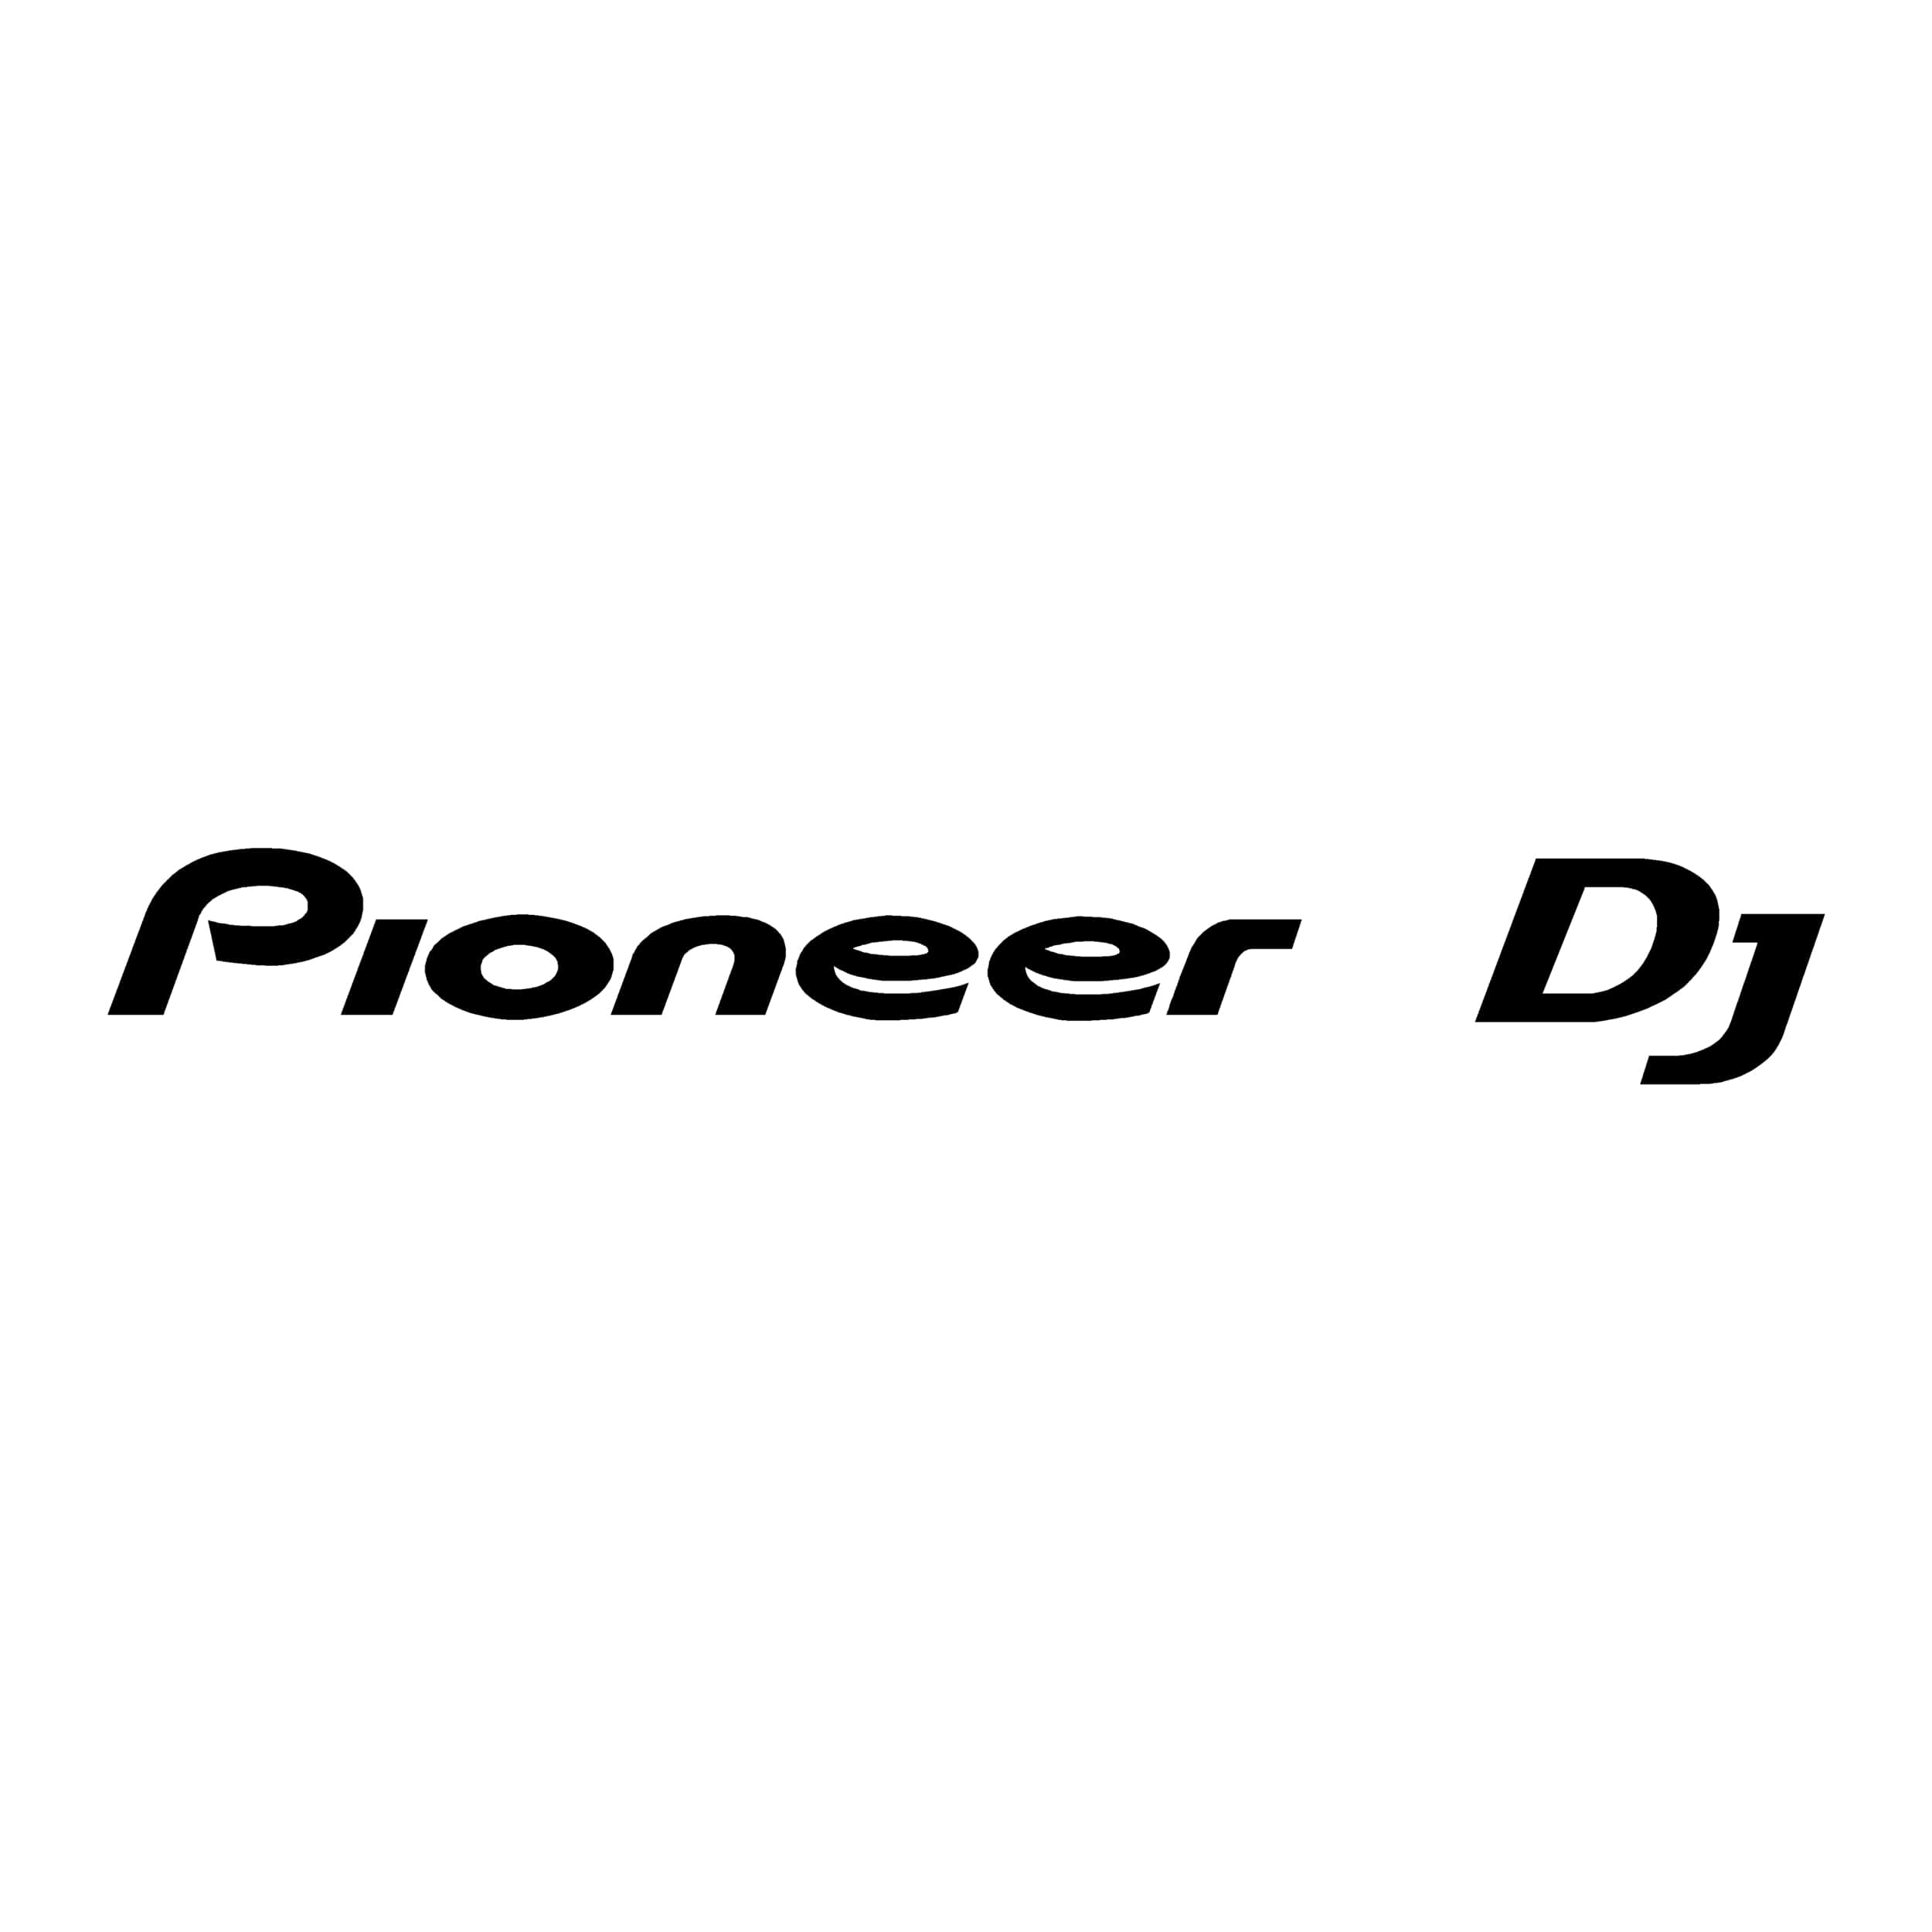 sticker-pioneer-dj-ref-5-tuning-audio-sonorisation-car-auto-moto-camion-competition-deco-rallye-autocollant-min